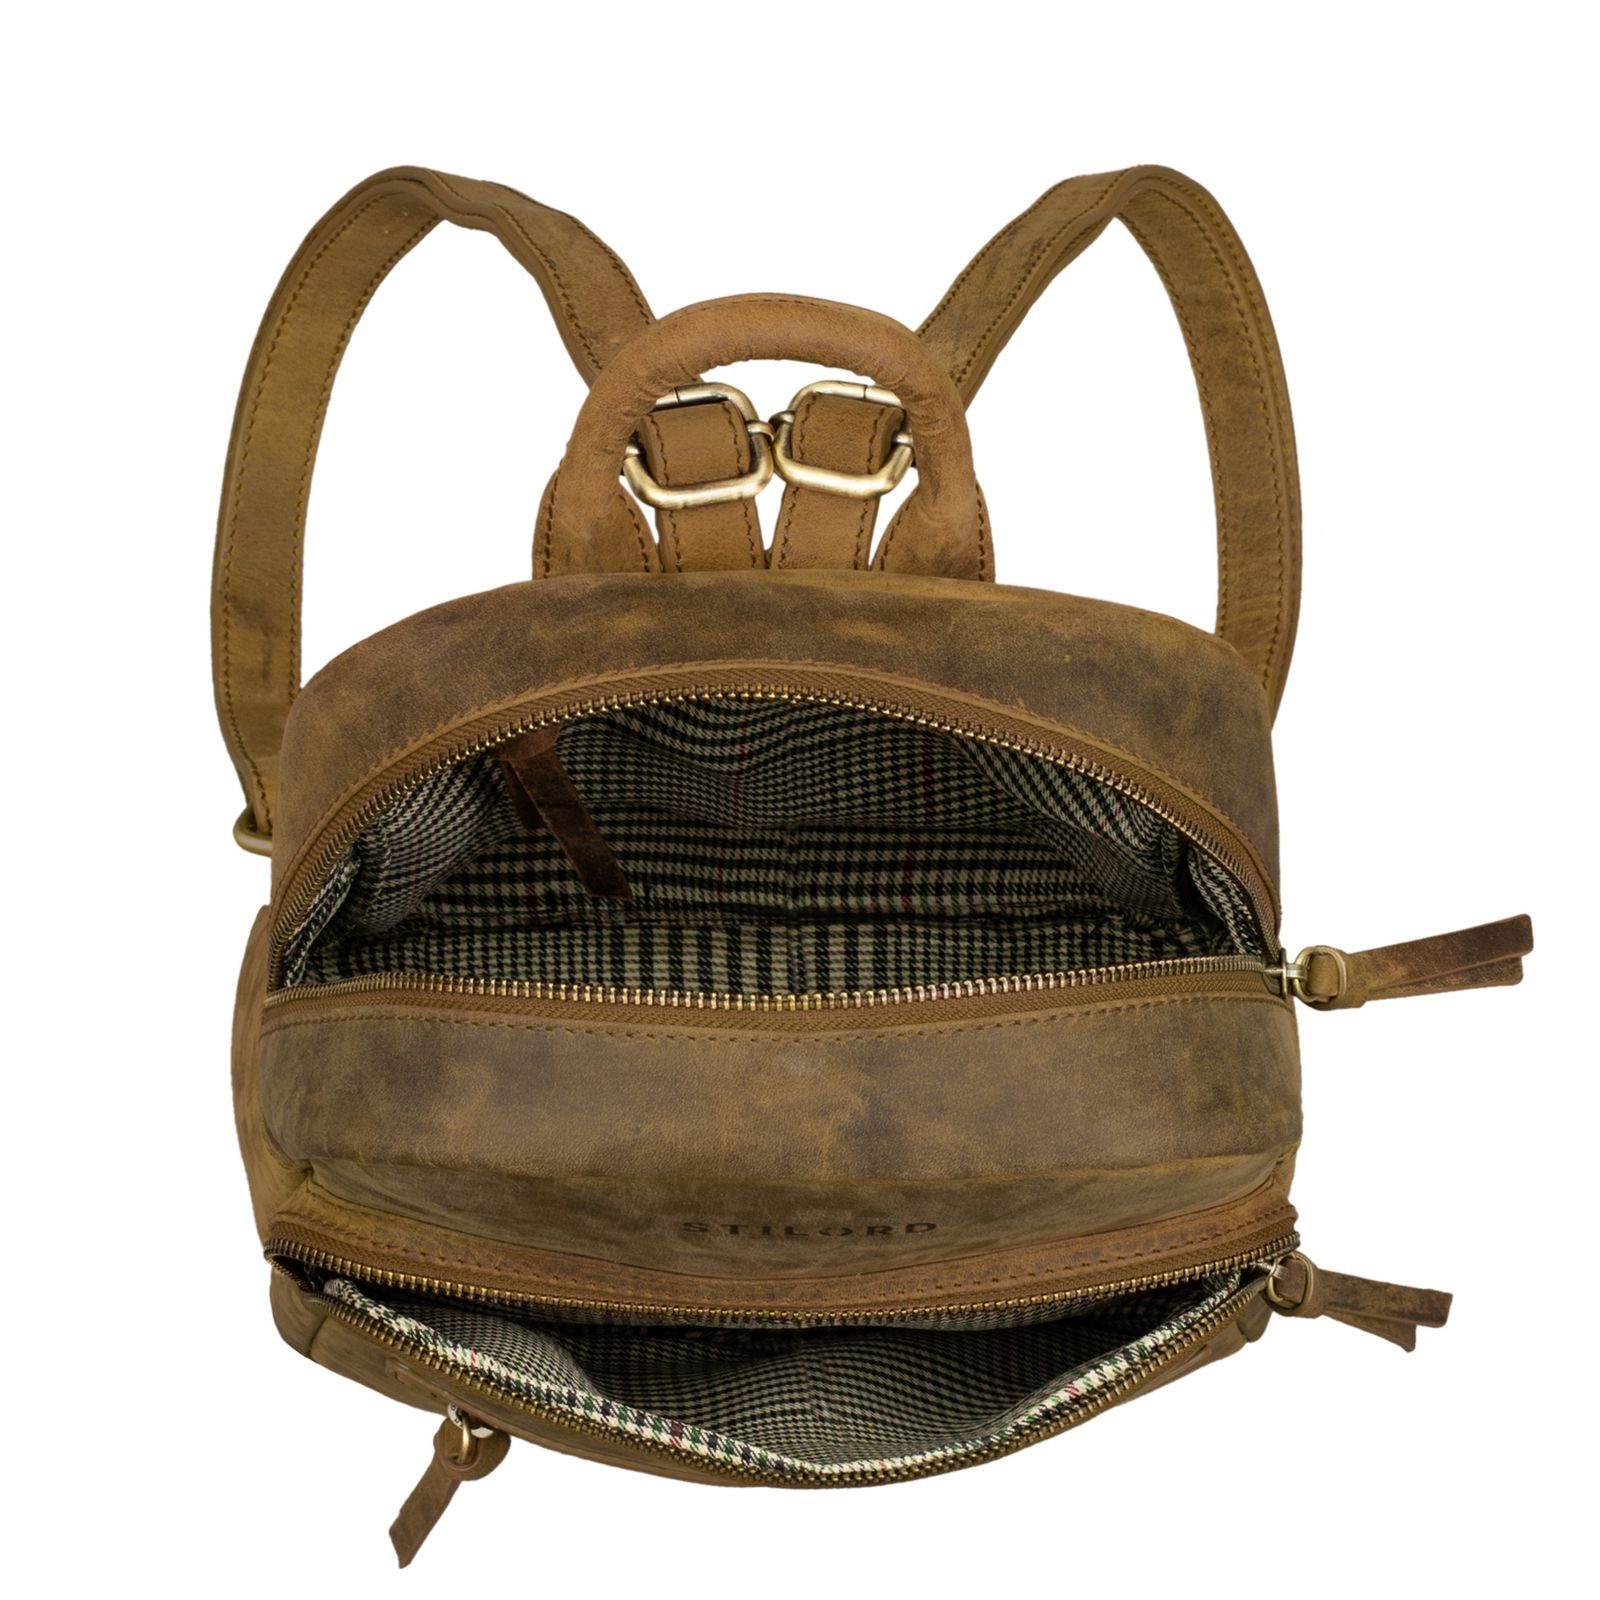 Leder Kleiner Damen Vintage Rucksack "Alba" braun - torino STILORD Cityrucksack